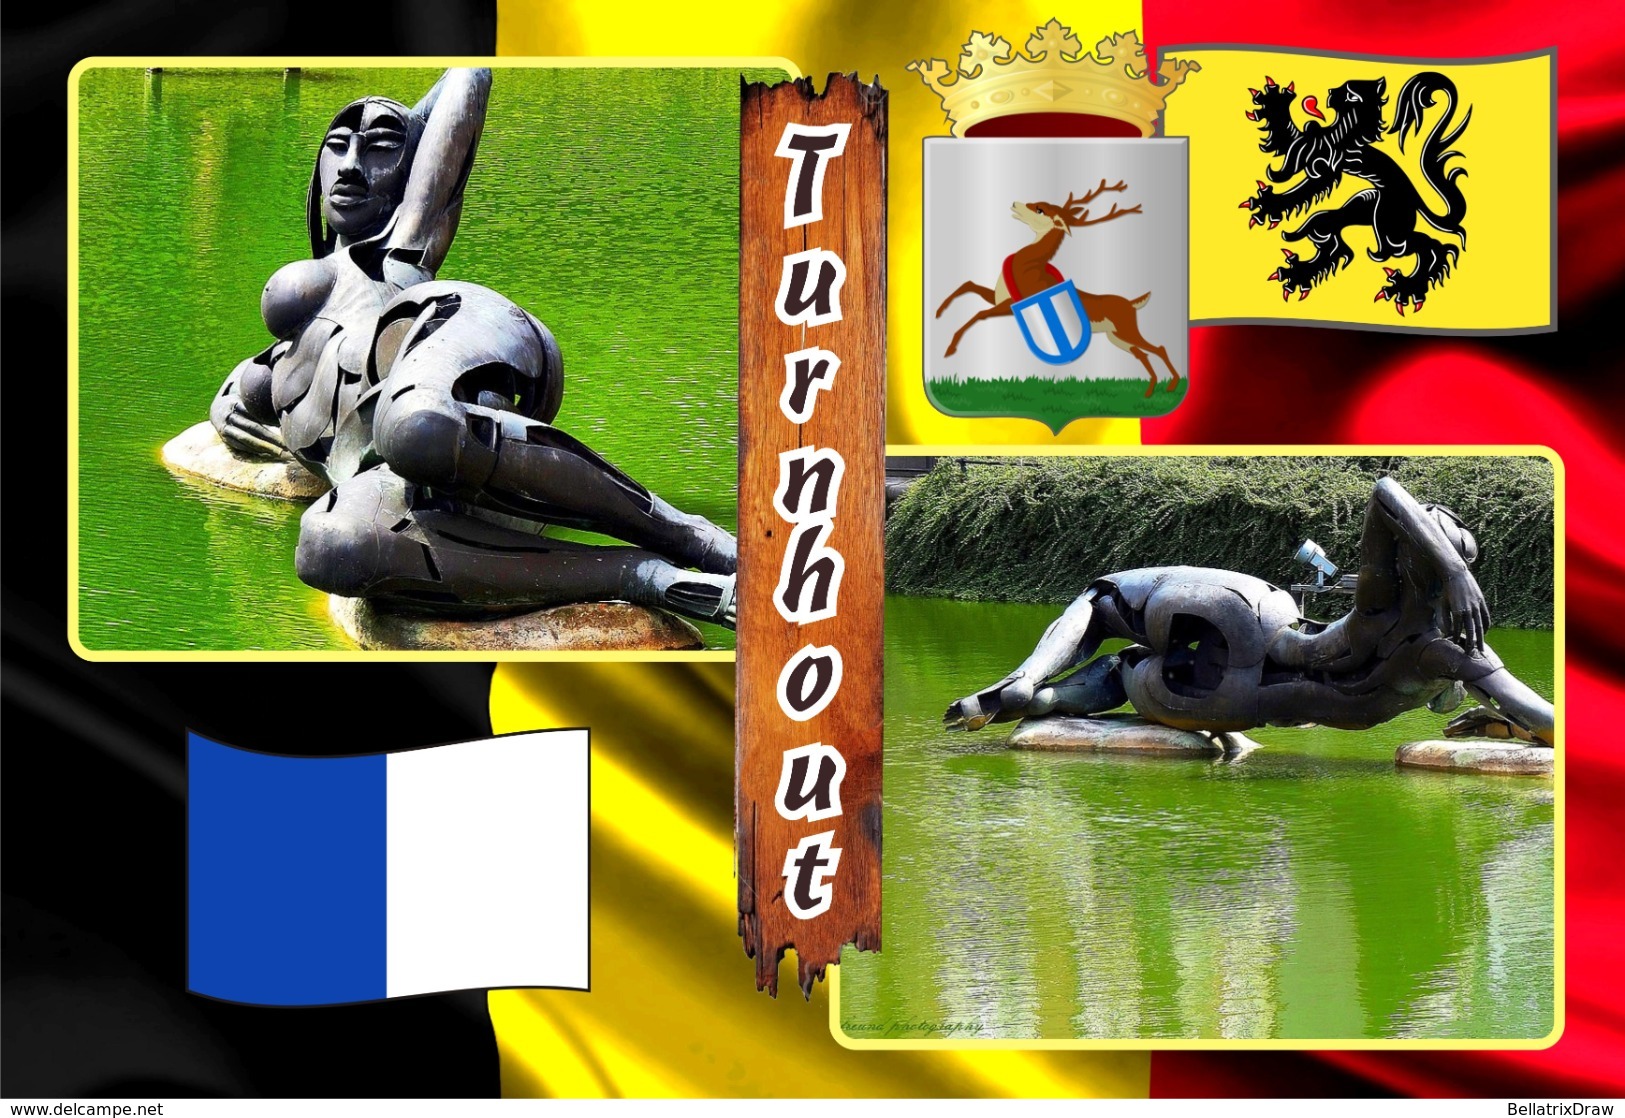 Postcards, REPRODUCTION, Municipalities of Belgium, Turnhout, duplex XIII (597-649) - 53 pcs.